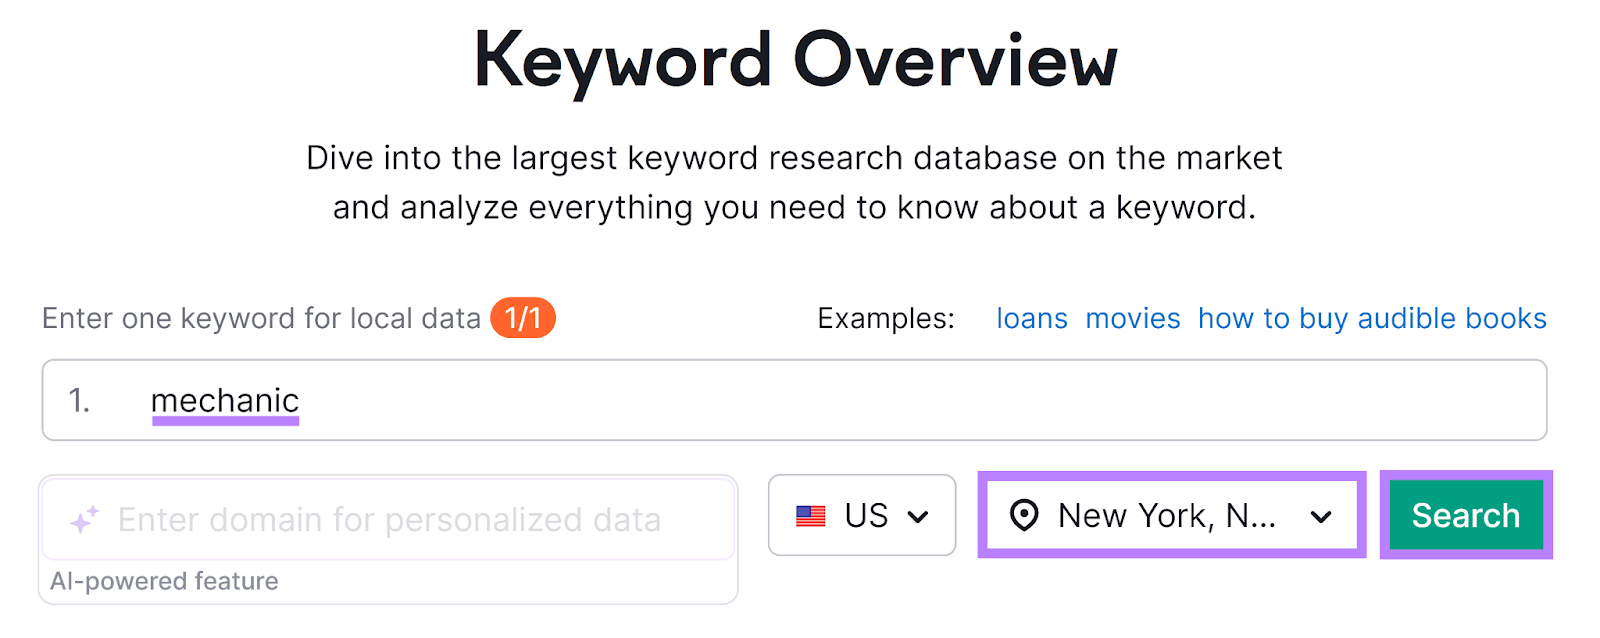 Keyword Overview tool start.